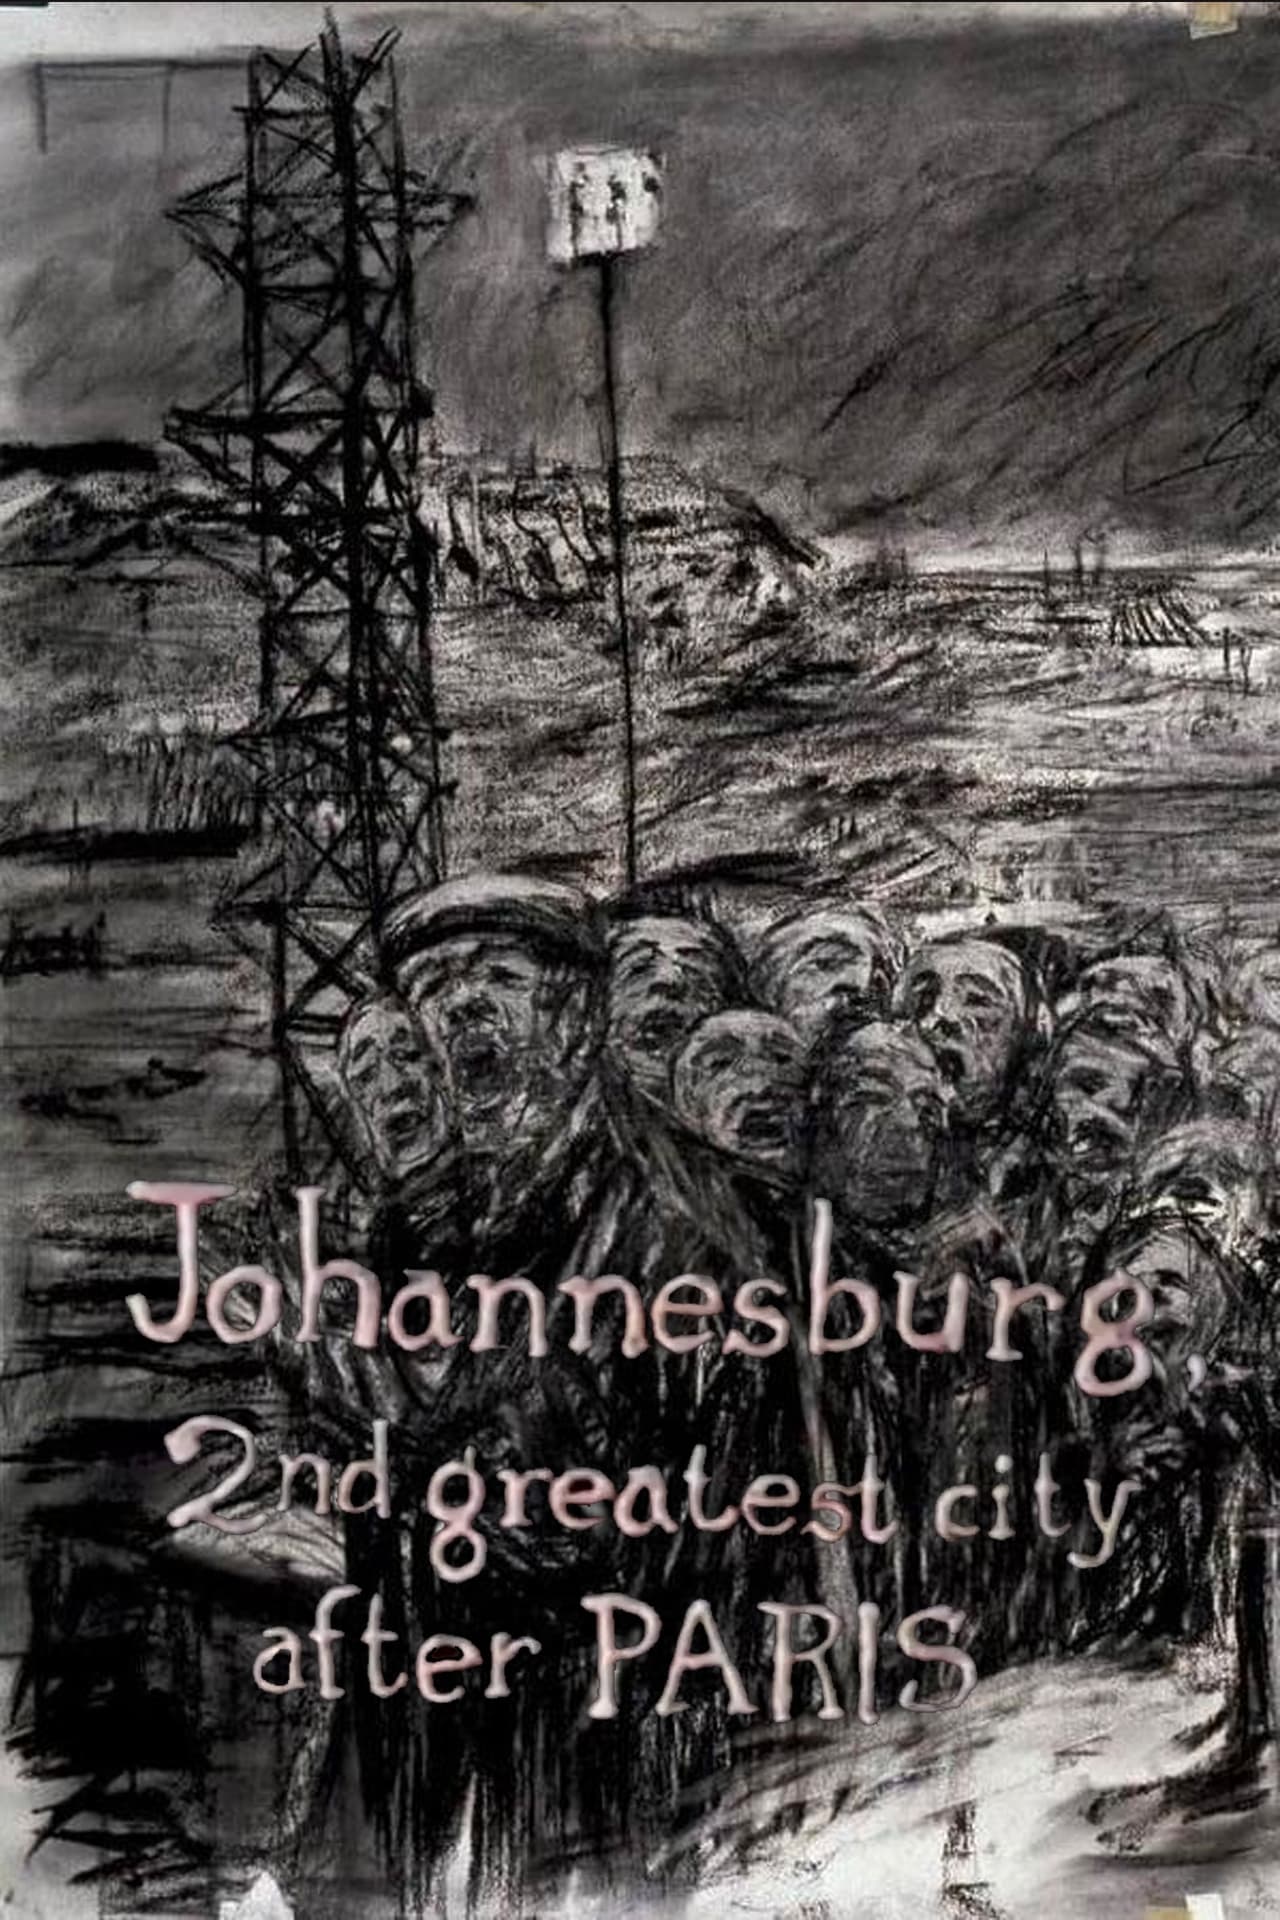 Johannesburg, 2nd Greatest City After Paris